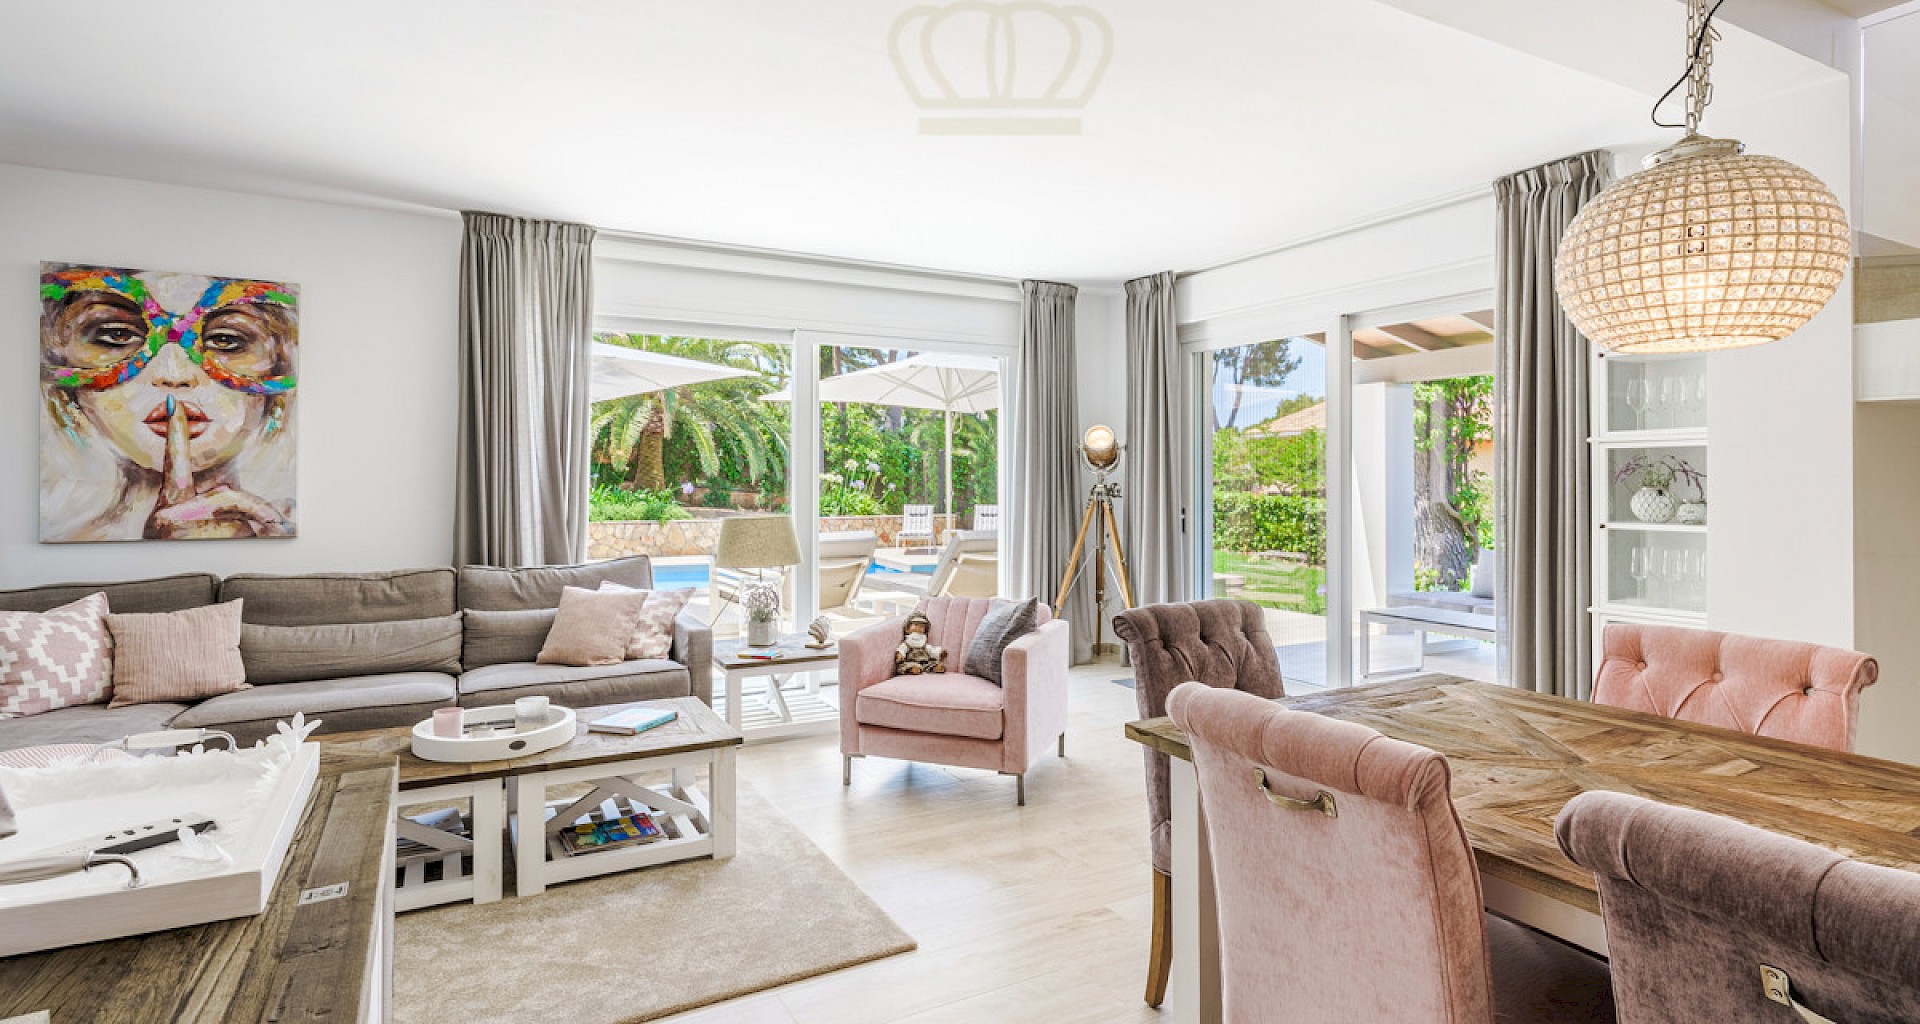 KROHN & LUEDEMANN Holiday Rental License - Luxury family villa in Santa Ponsa with pool and garden 